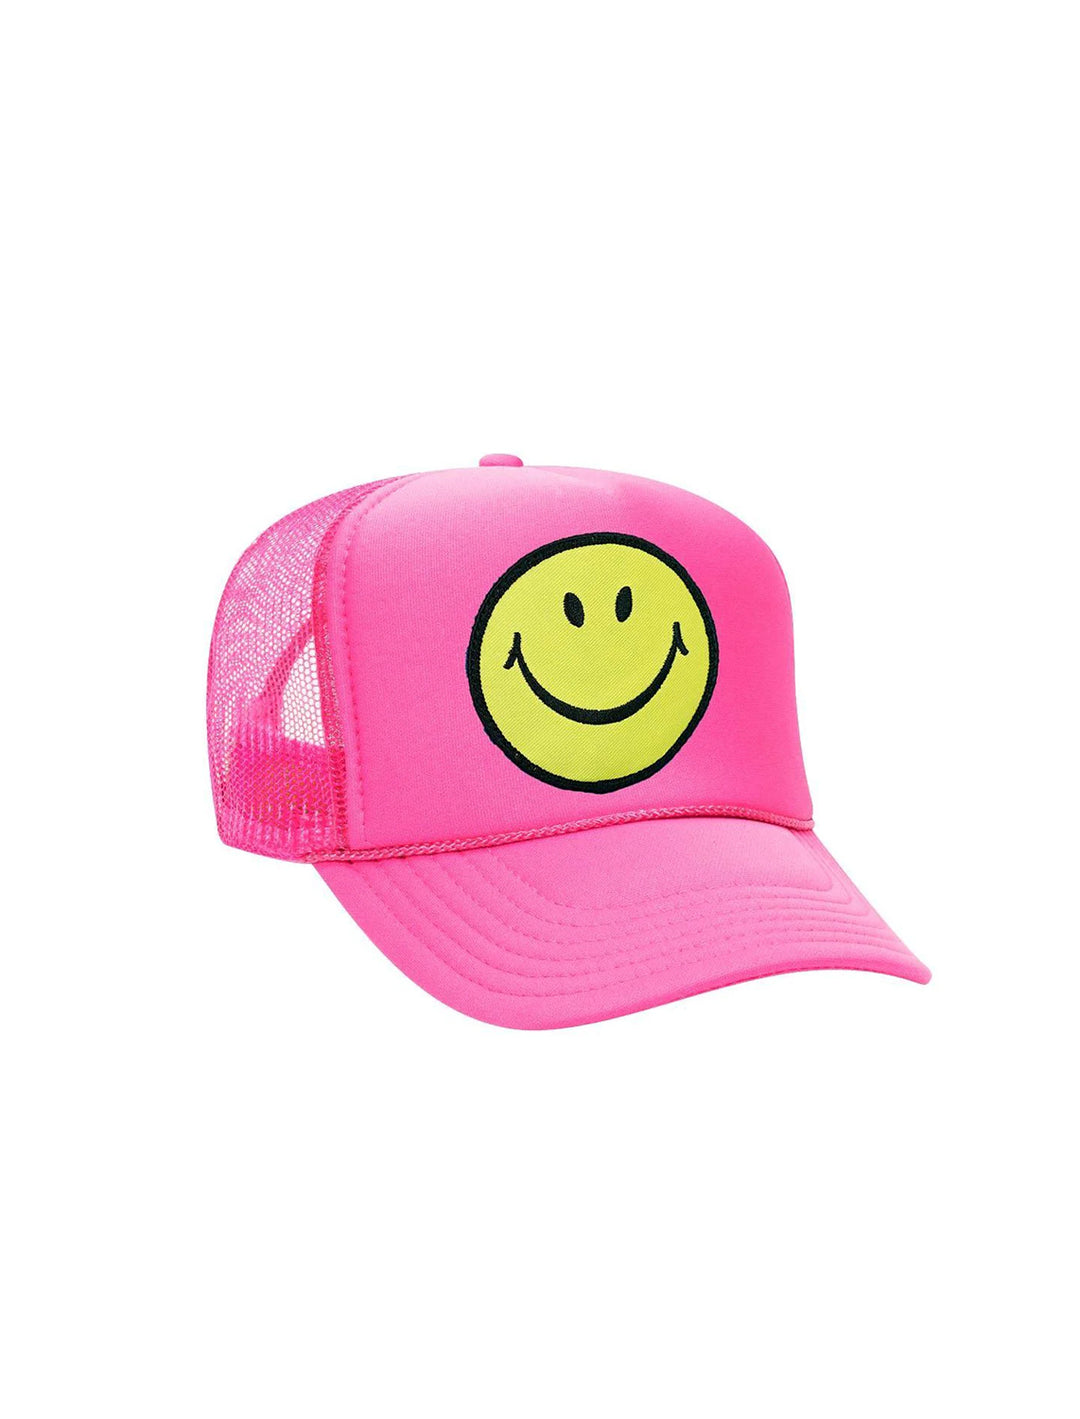 Aviator Nation's smiley vintage low profile trucker hat in neon pink